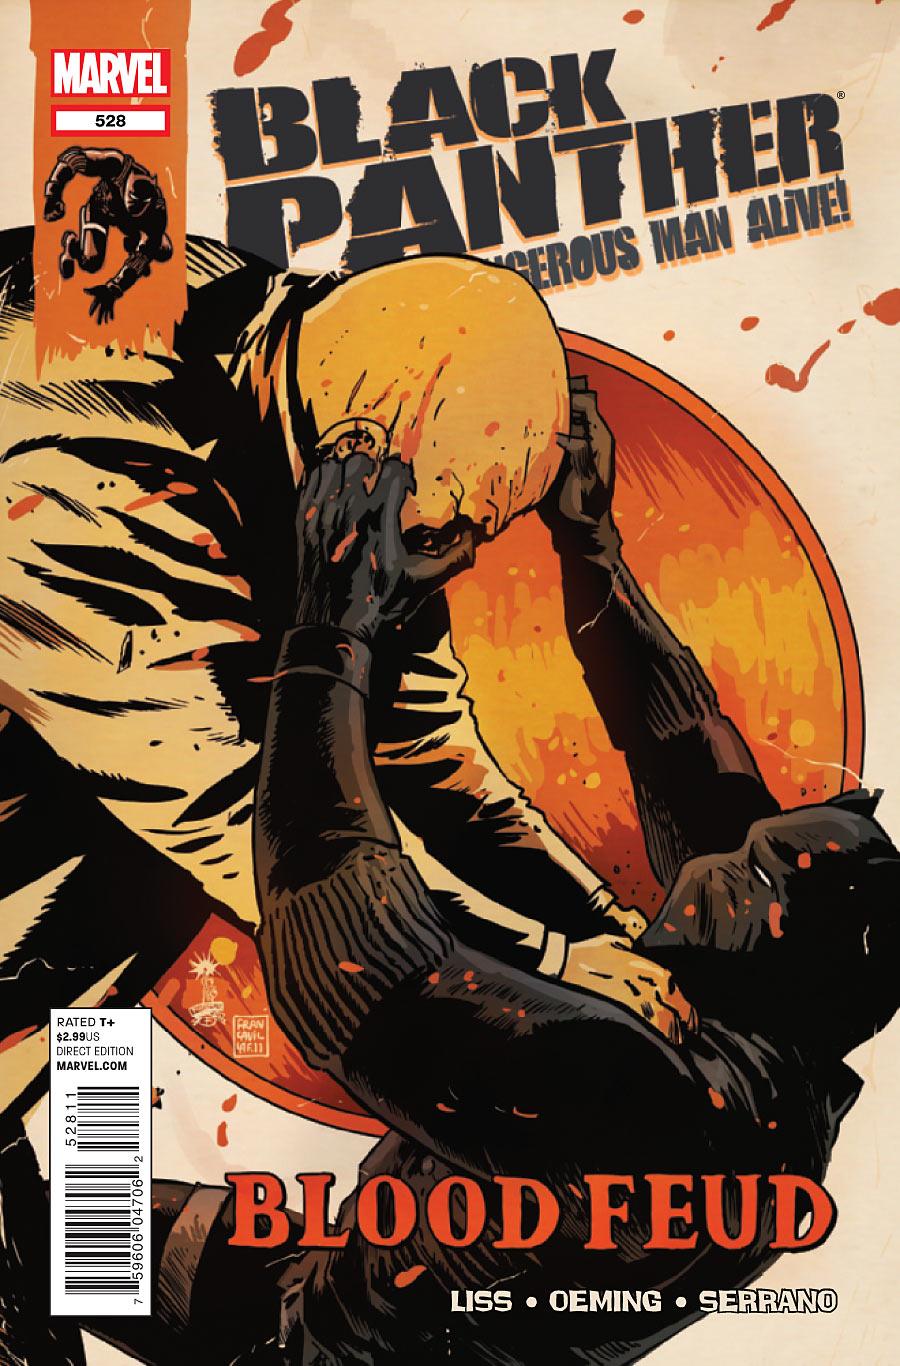 Black Panther: The Most Dangerous Man Alive Vol. 1 #528